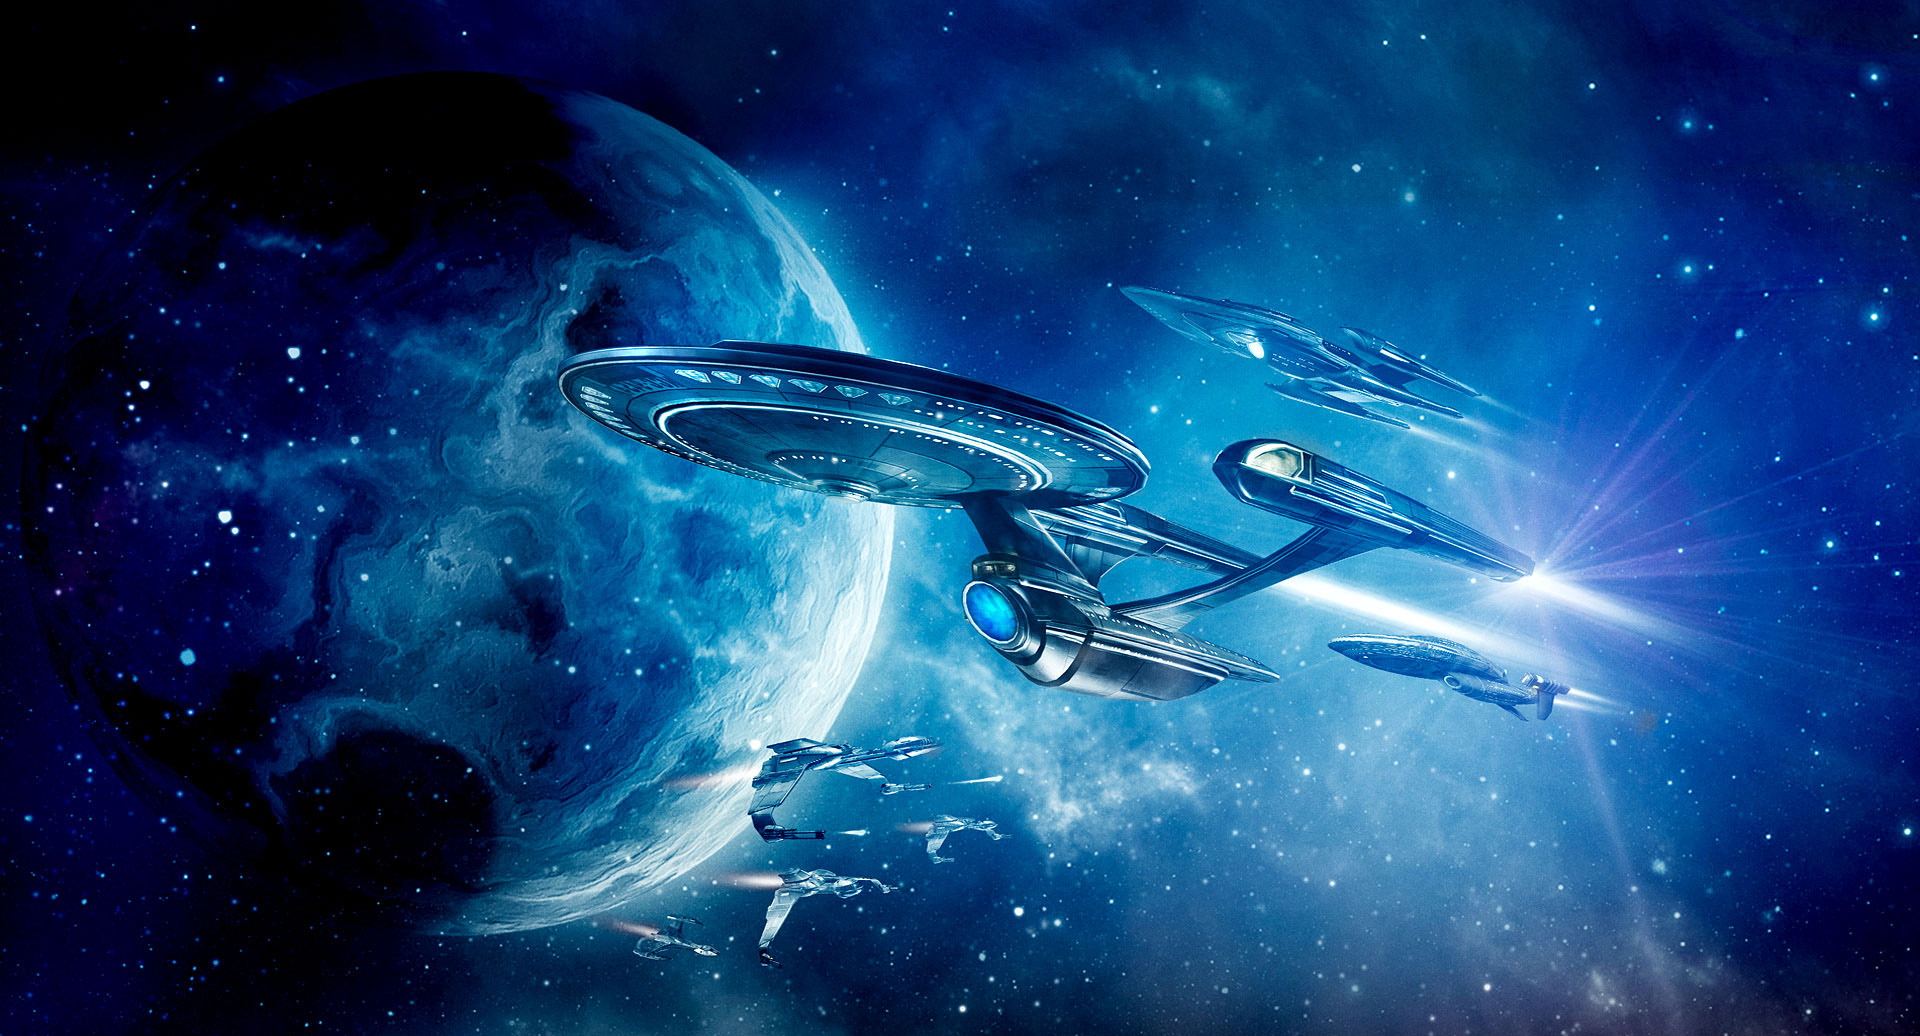 Star Trek Wallpaper Related Keywords amp Suggestions Star